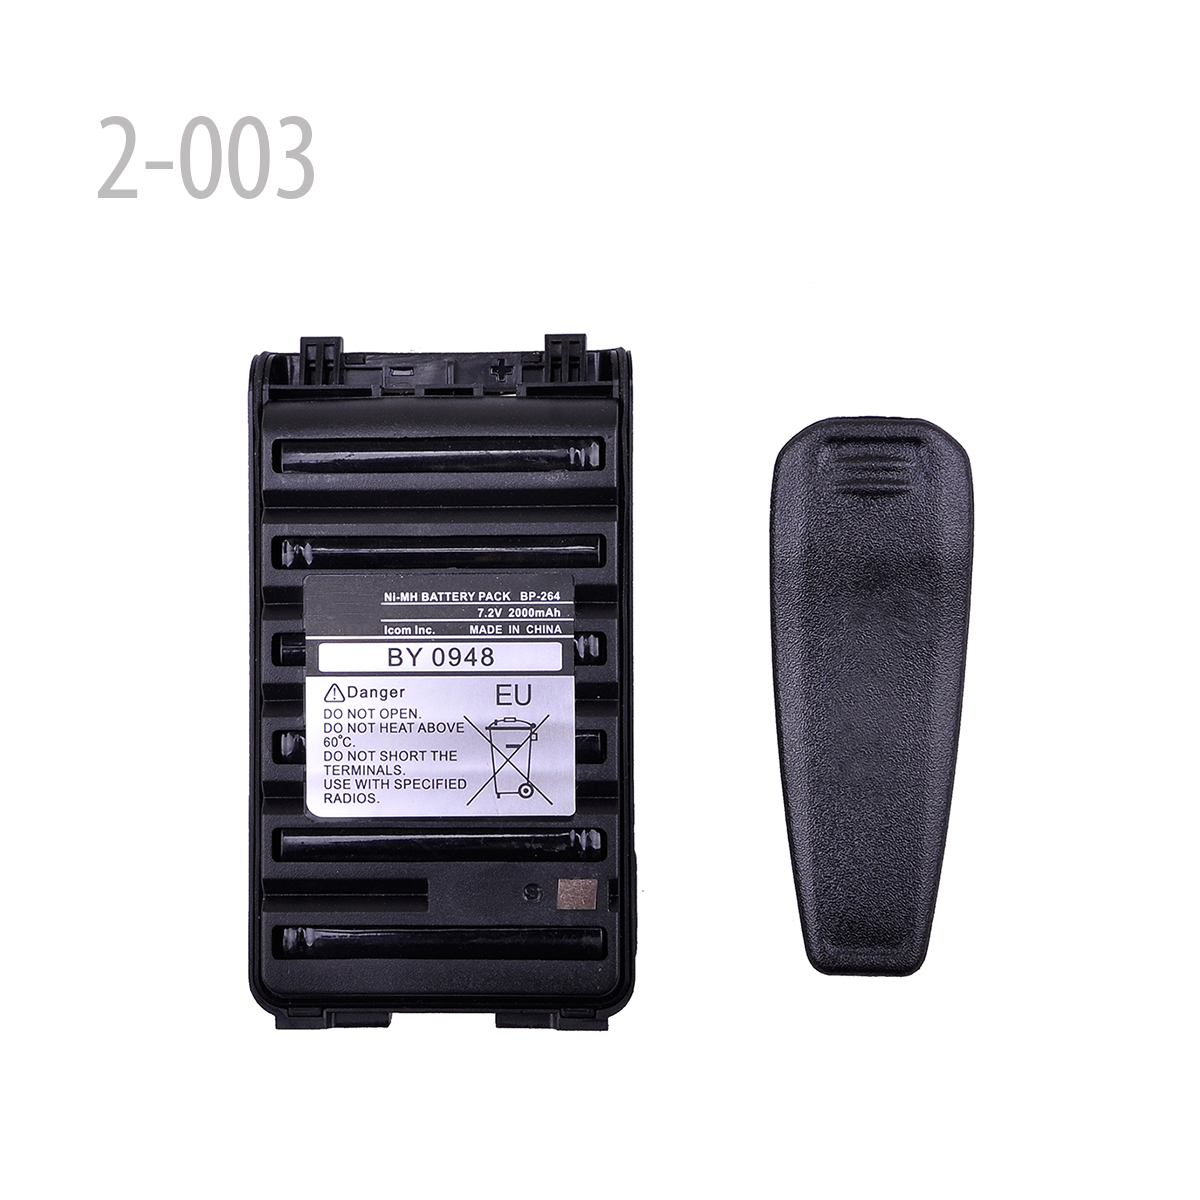 .2V 2000MAH NI-MH BATTERY FOR ICOM BP-264  for IC-V80 HT radios, etc.